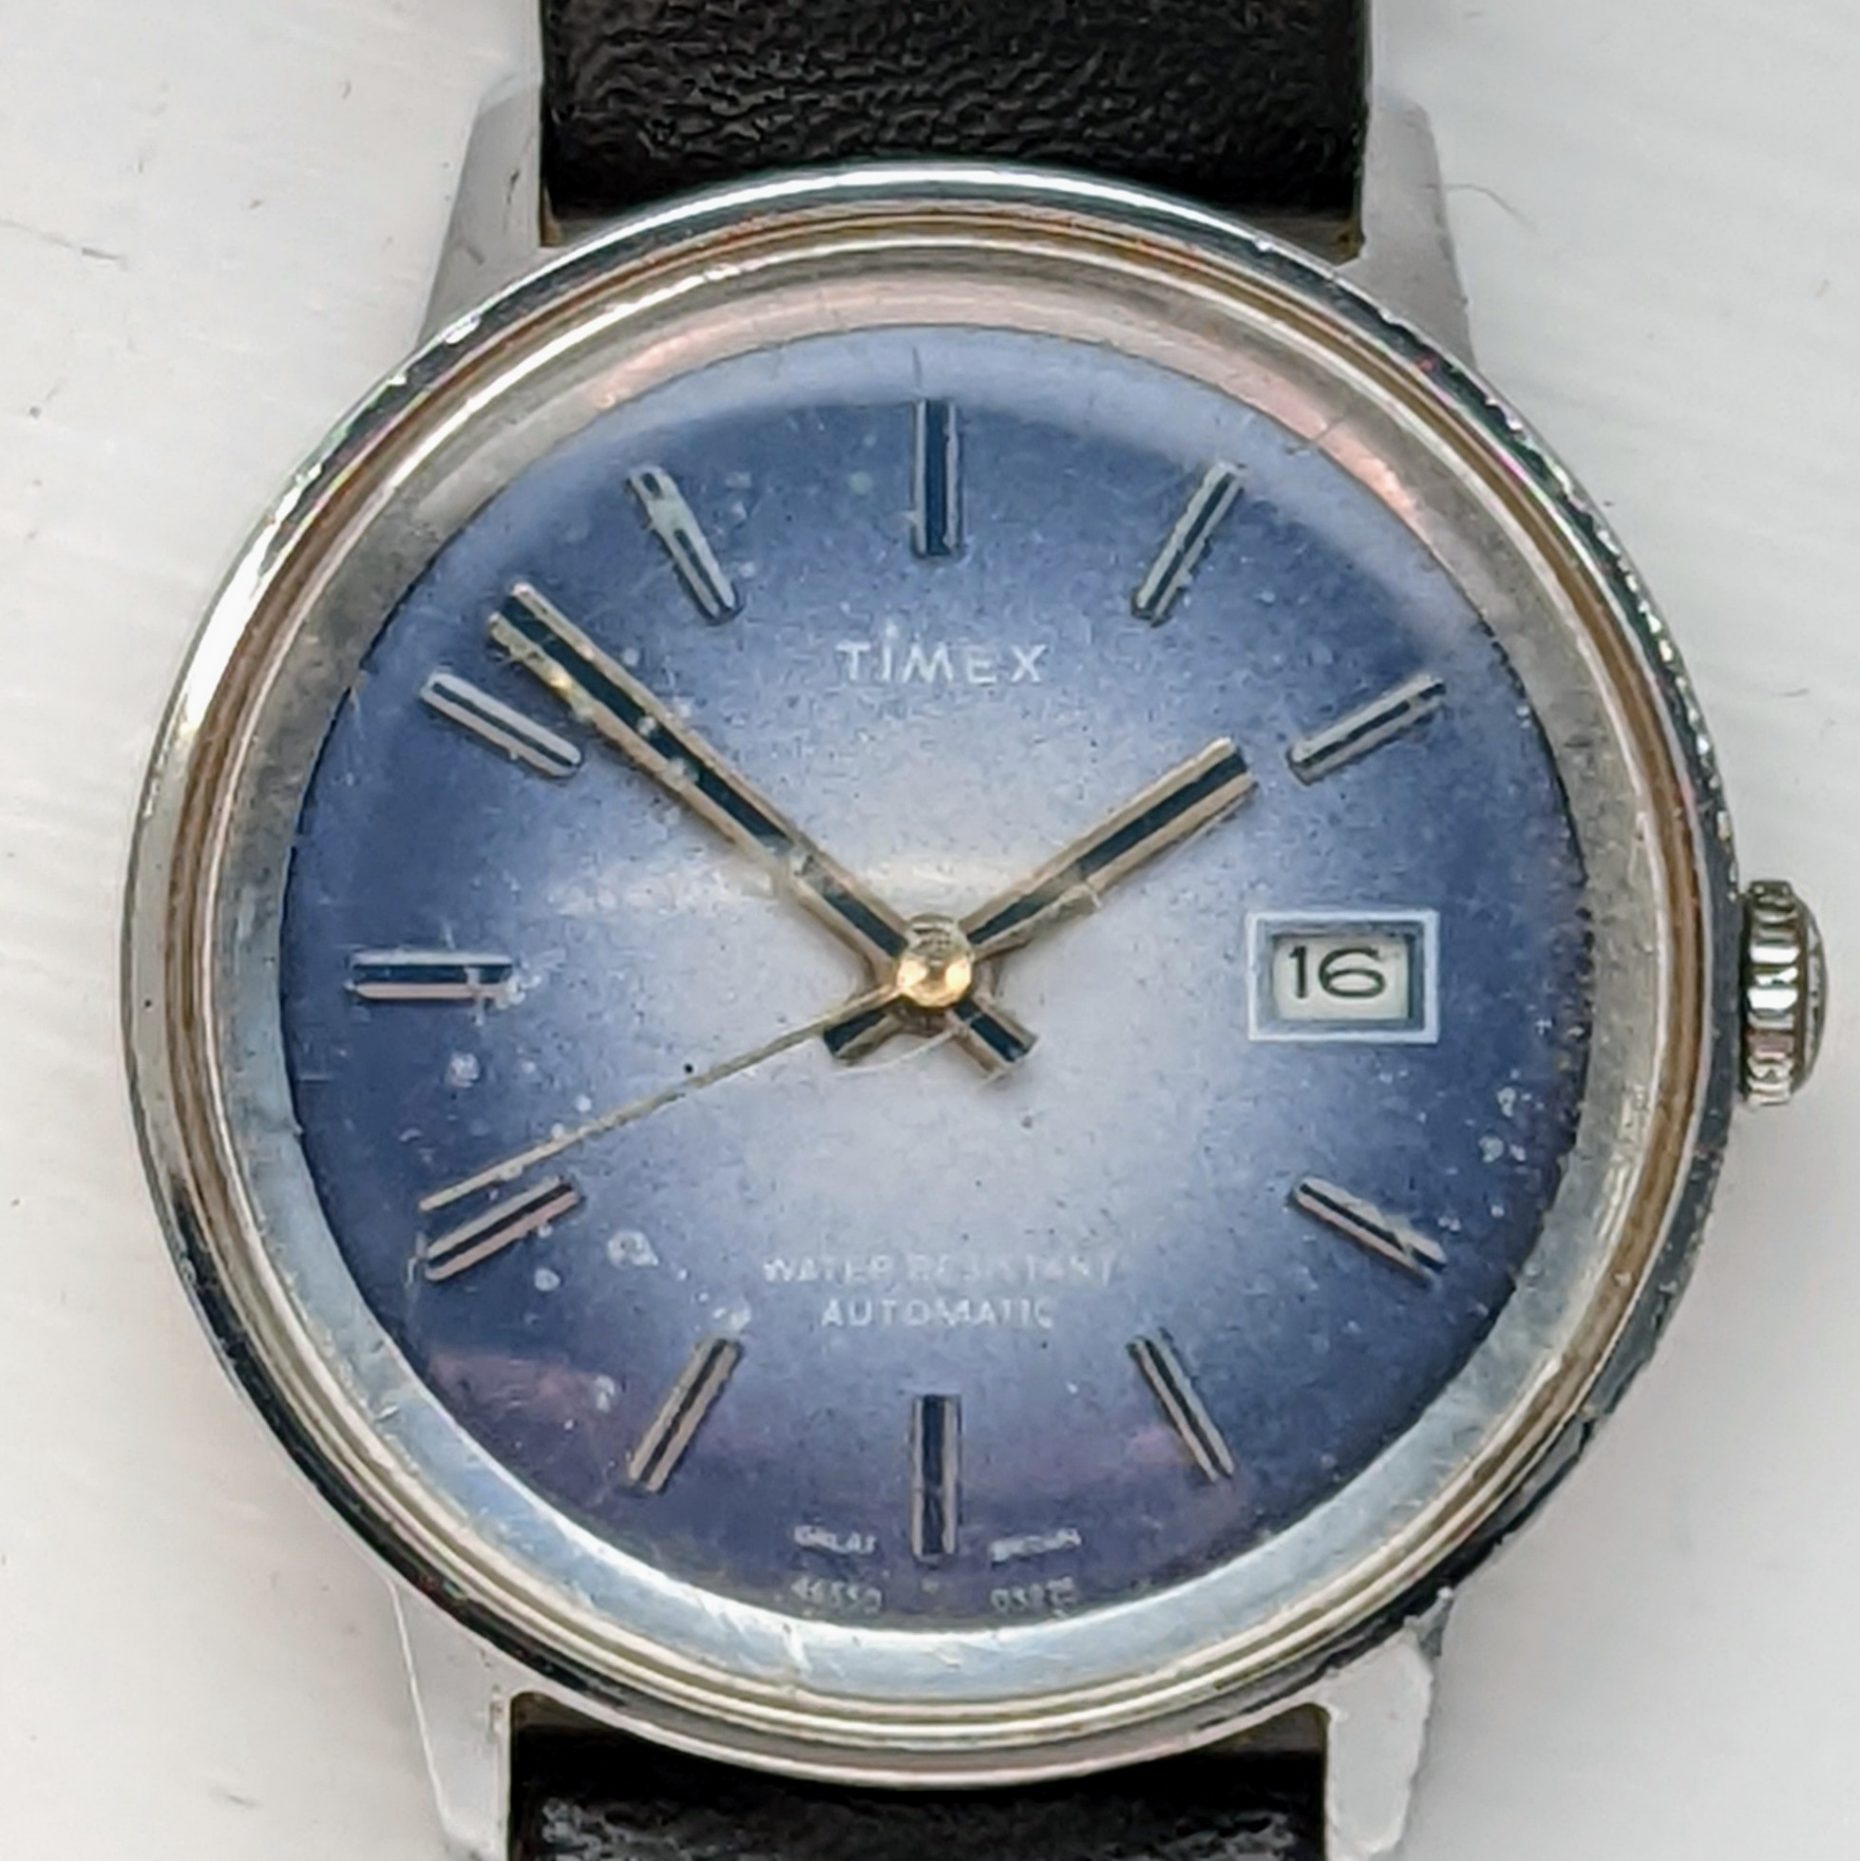 Timex Viscount 46550 03275 [1975]